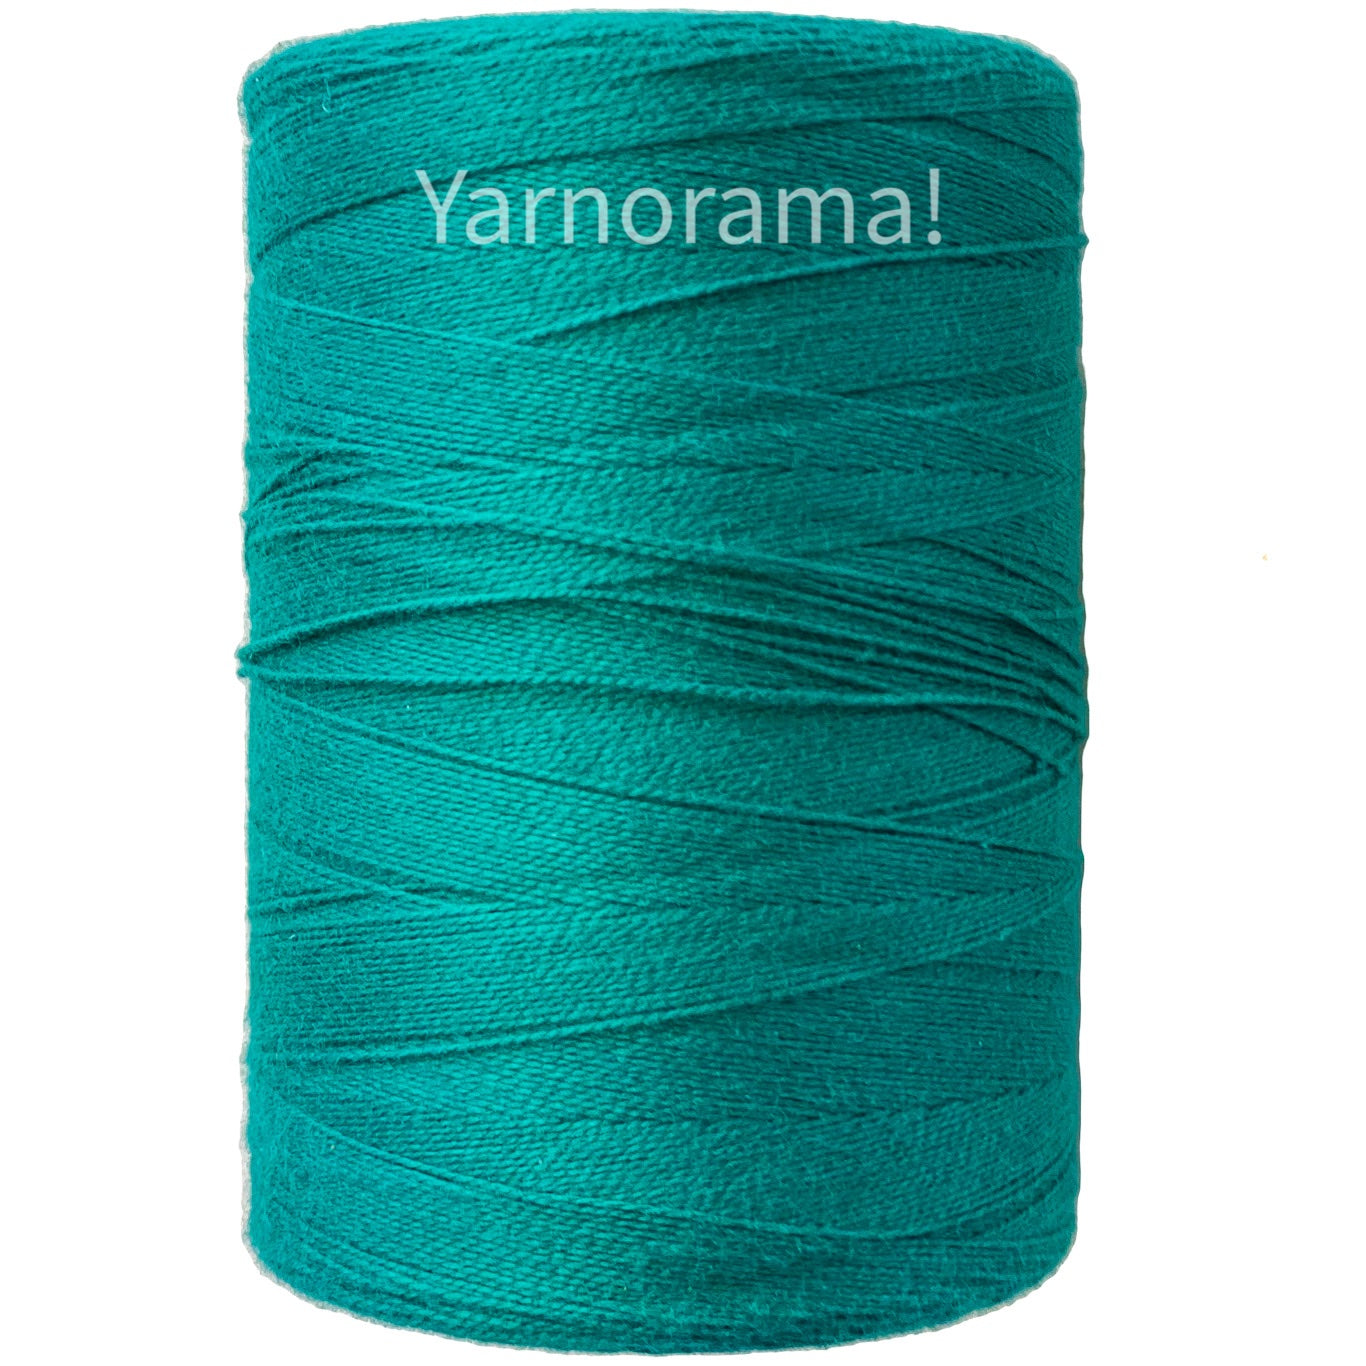 8/4 Unmercerized Cotton - Maurice Brassard-Weaving Yarn-Aqua Marine - 5206-Yarnorama